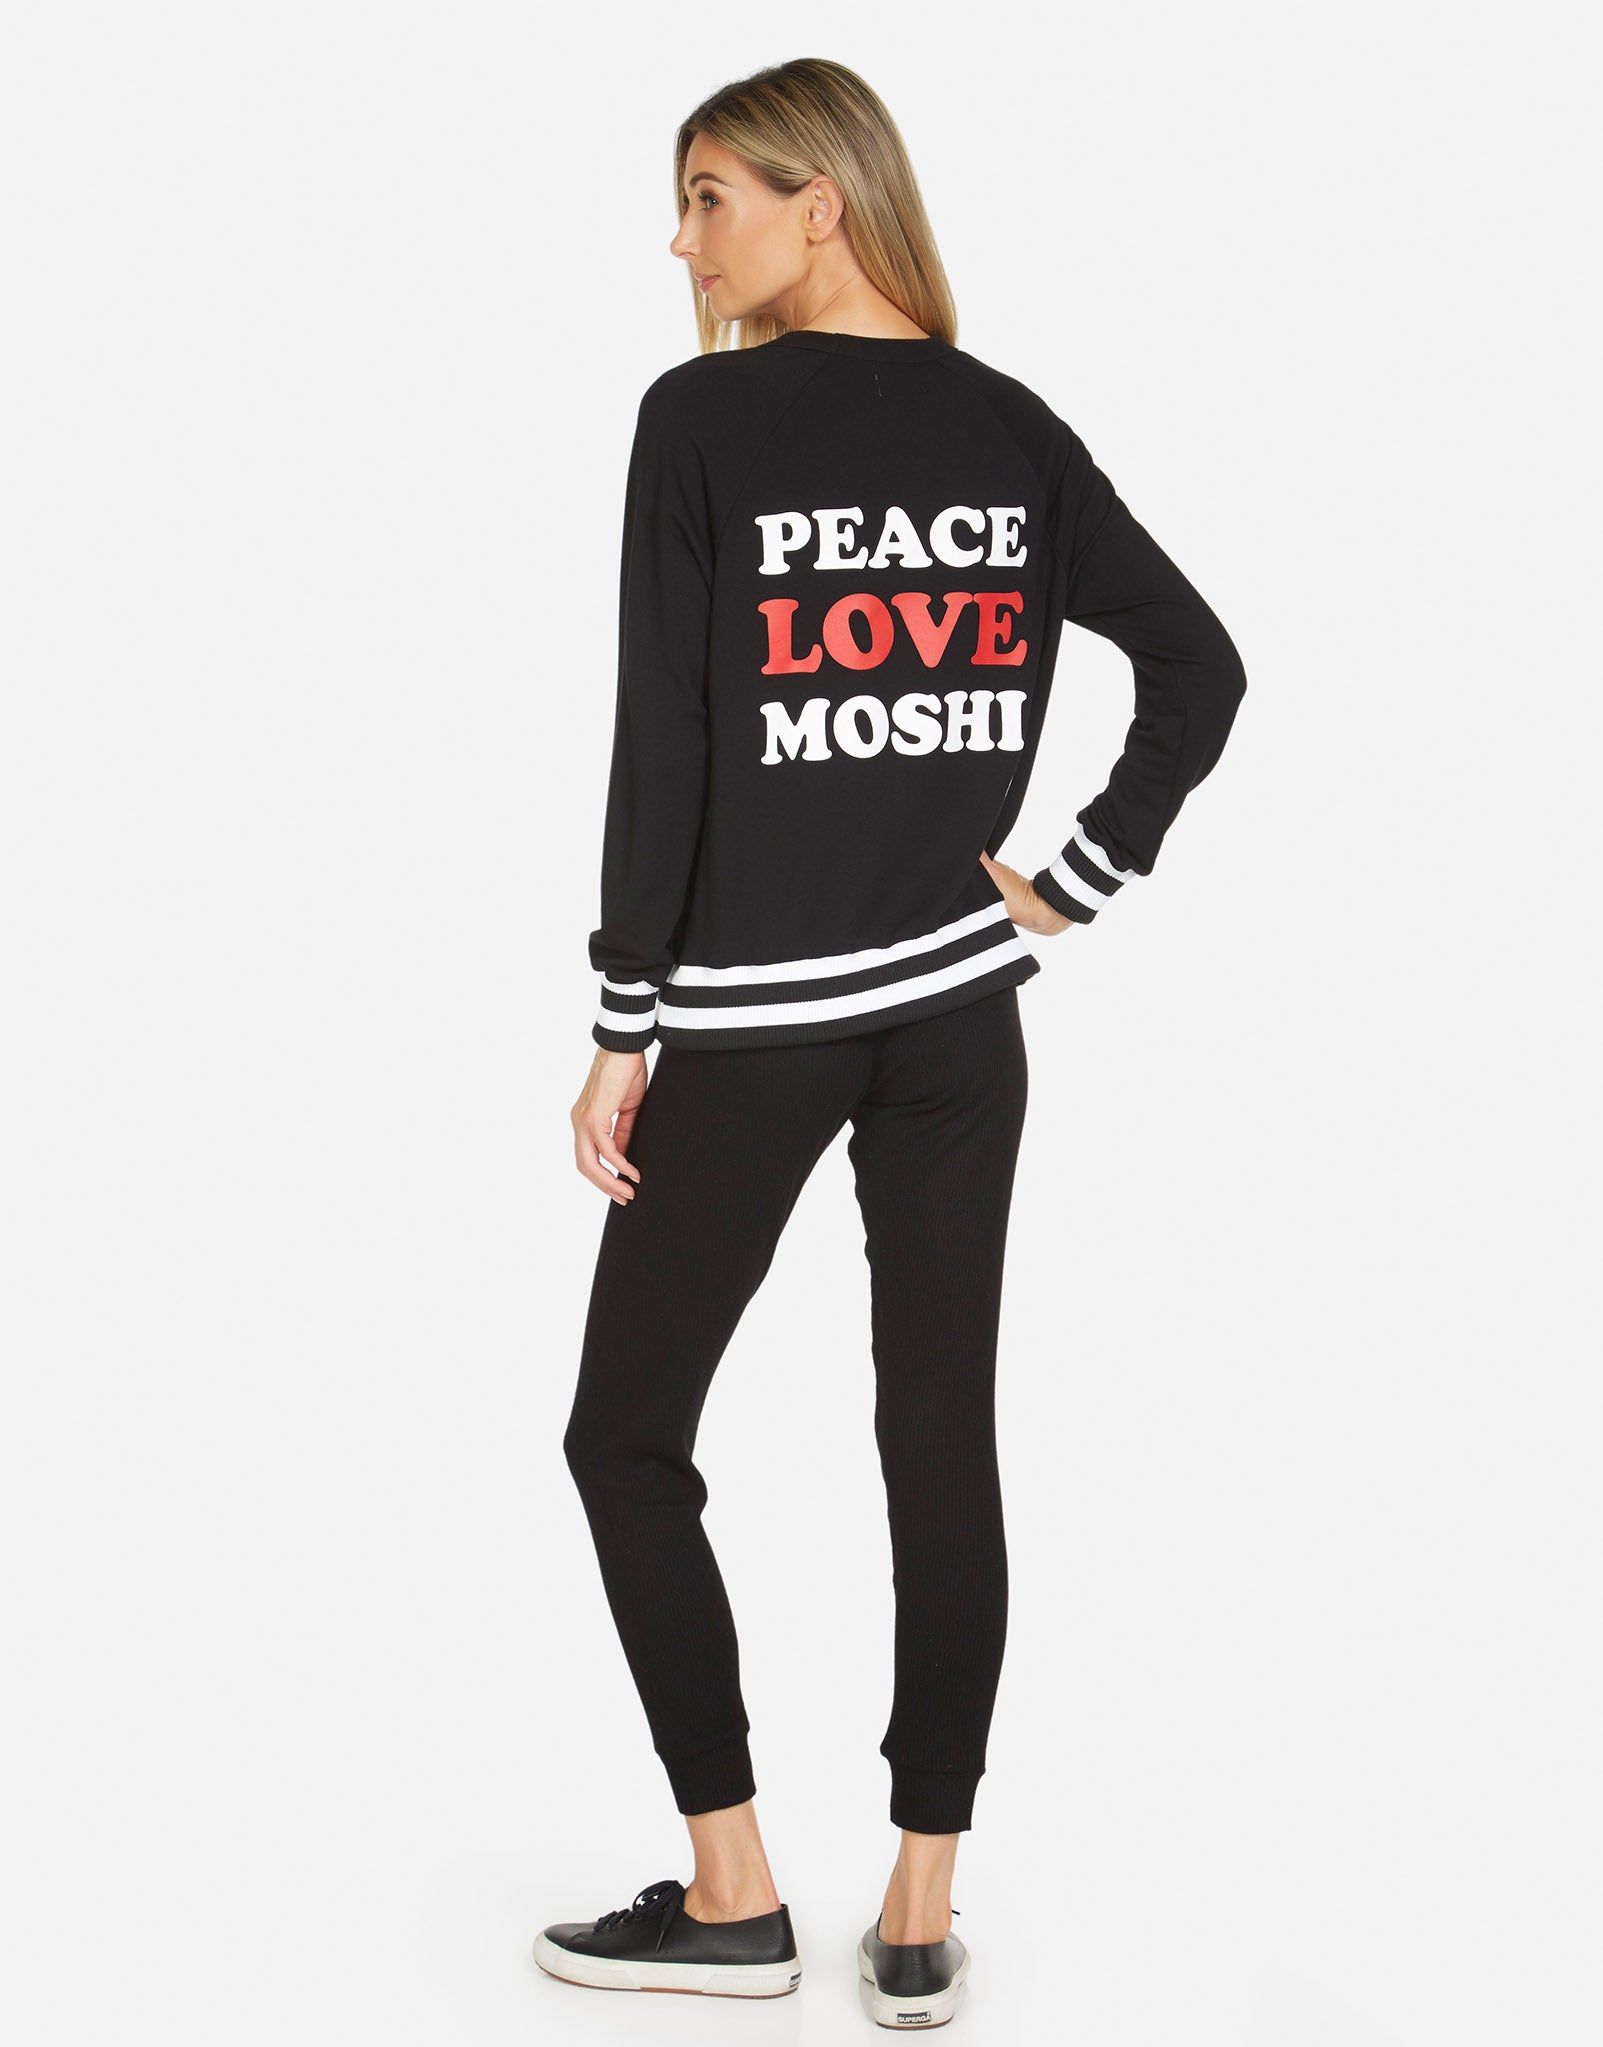 Rachel Peace Love Moshi